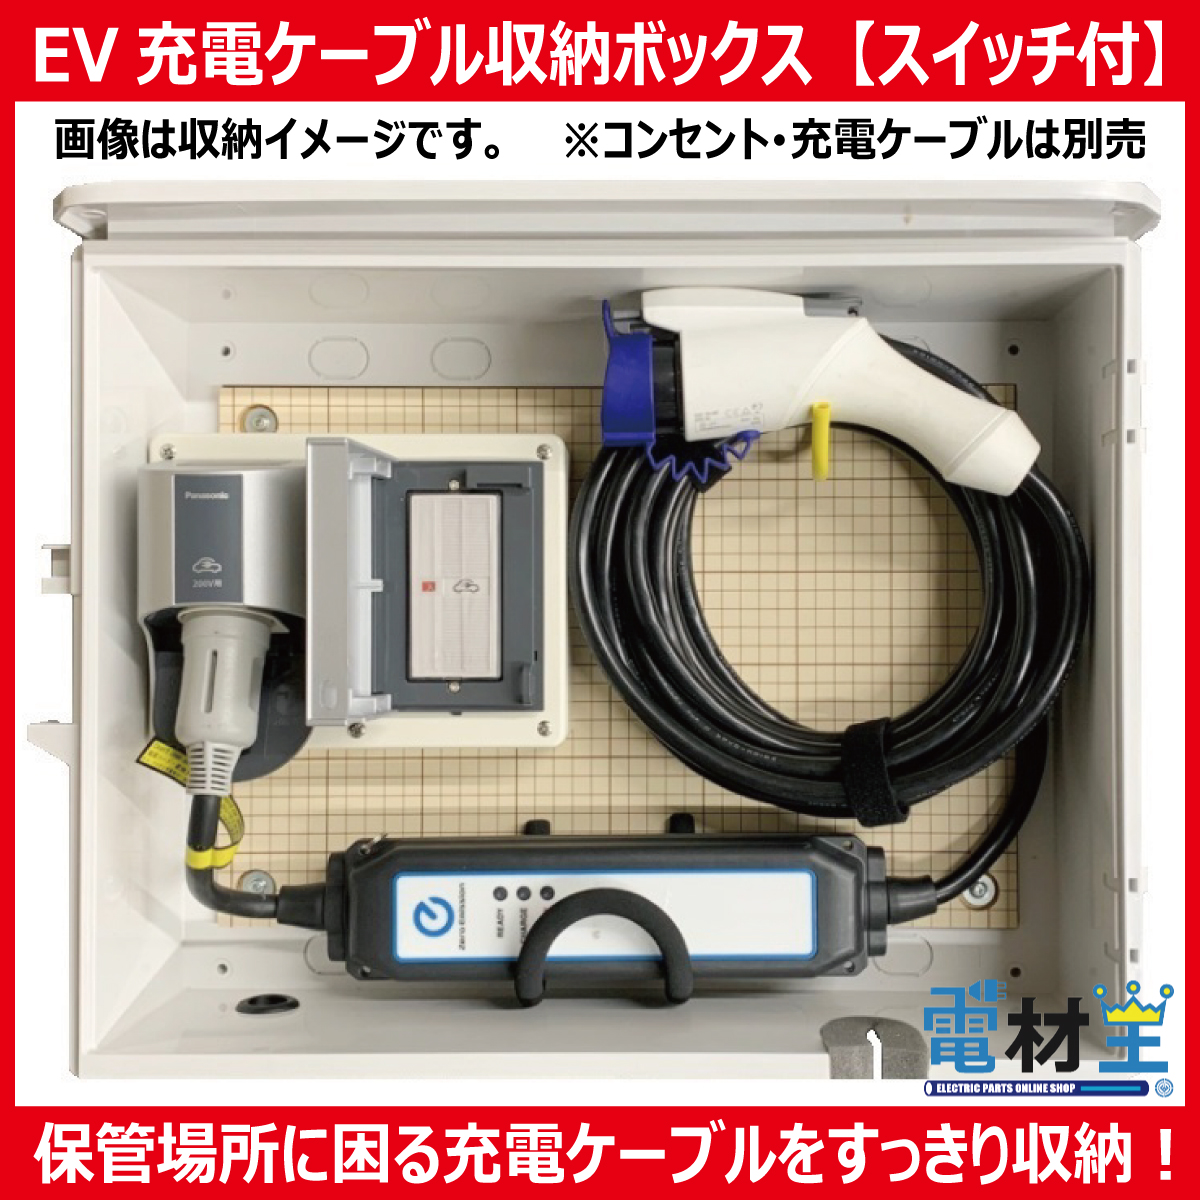 EV PHEV用 充電ケーブル収納ボックス スイッチ付 D-EVBOX54A-S 電気自動車画像